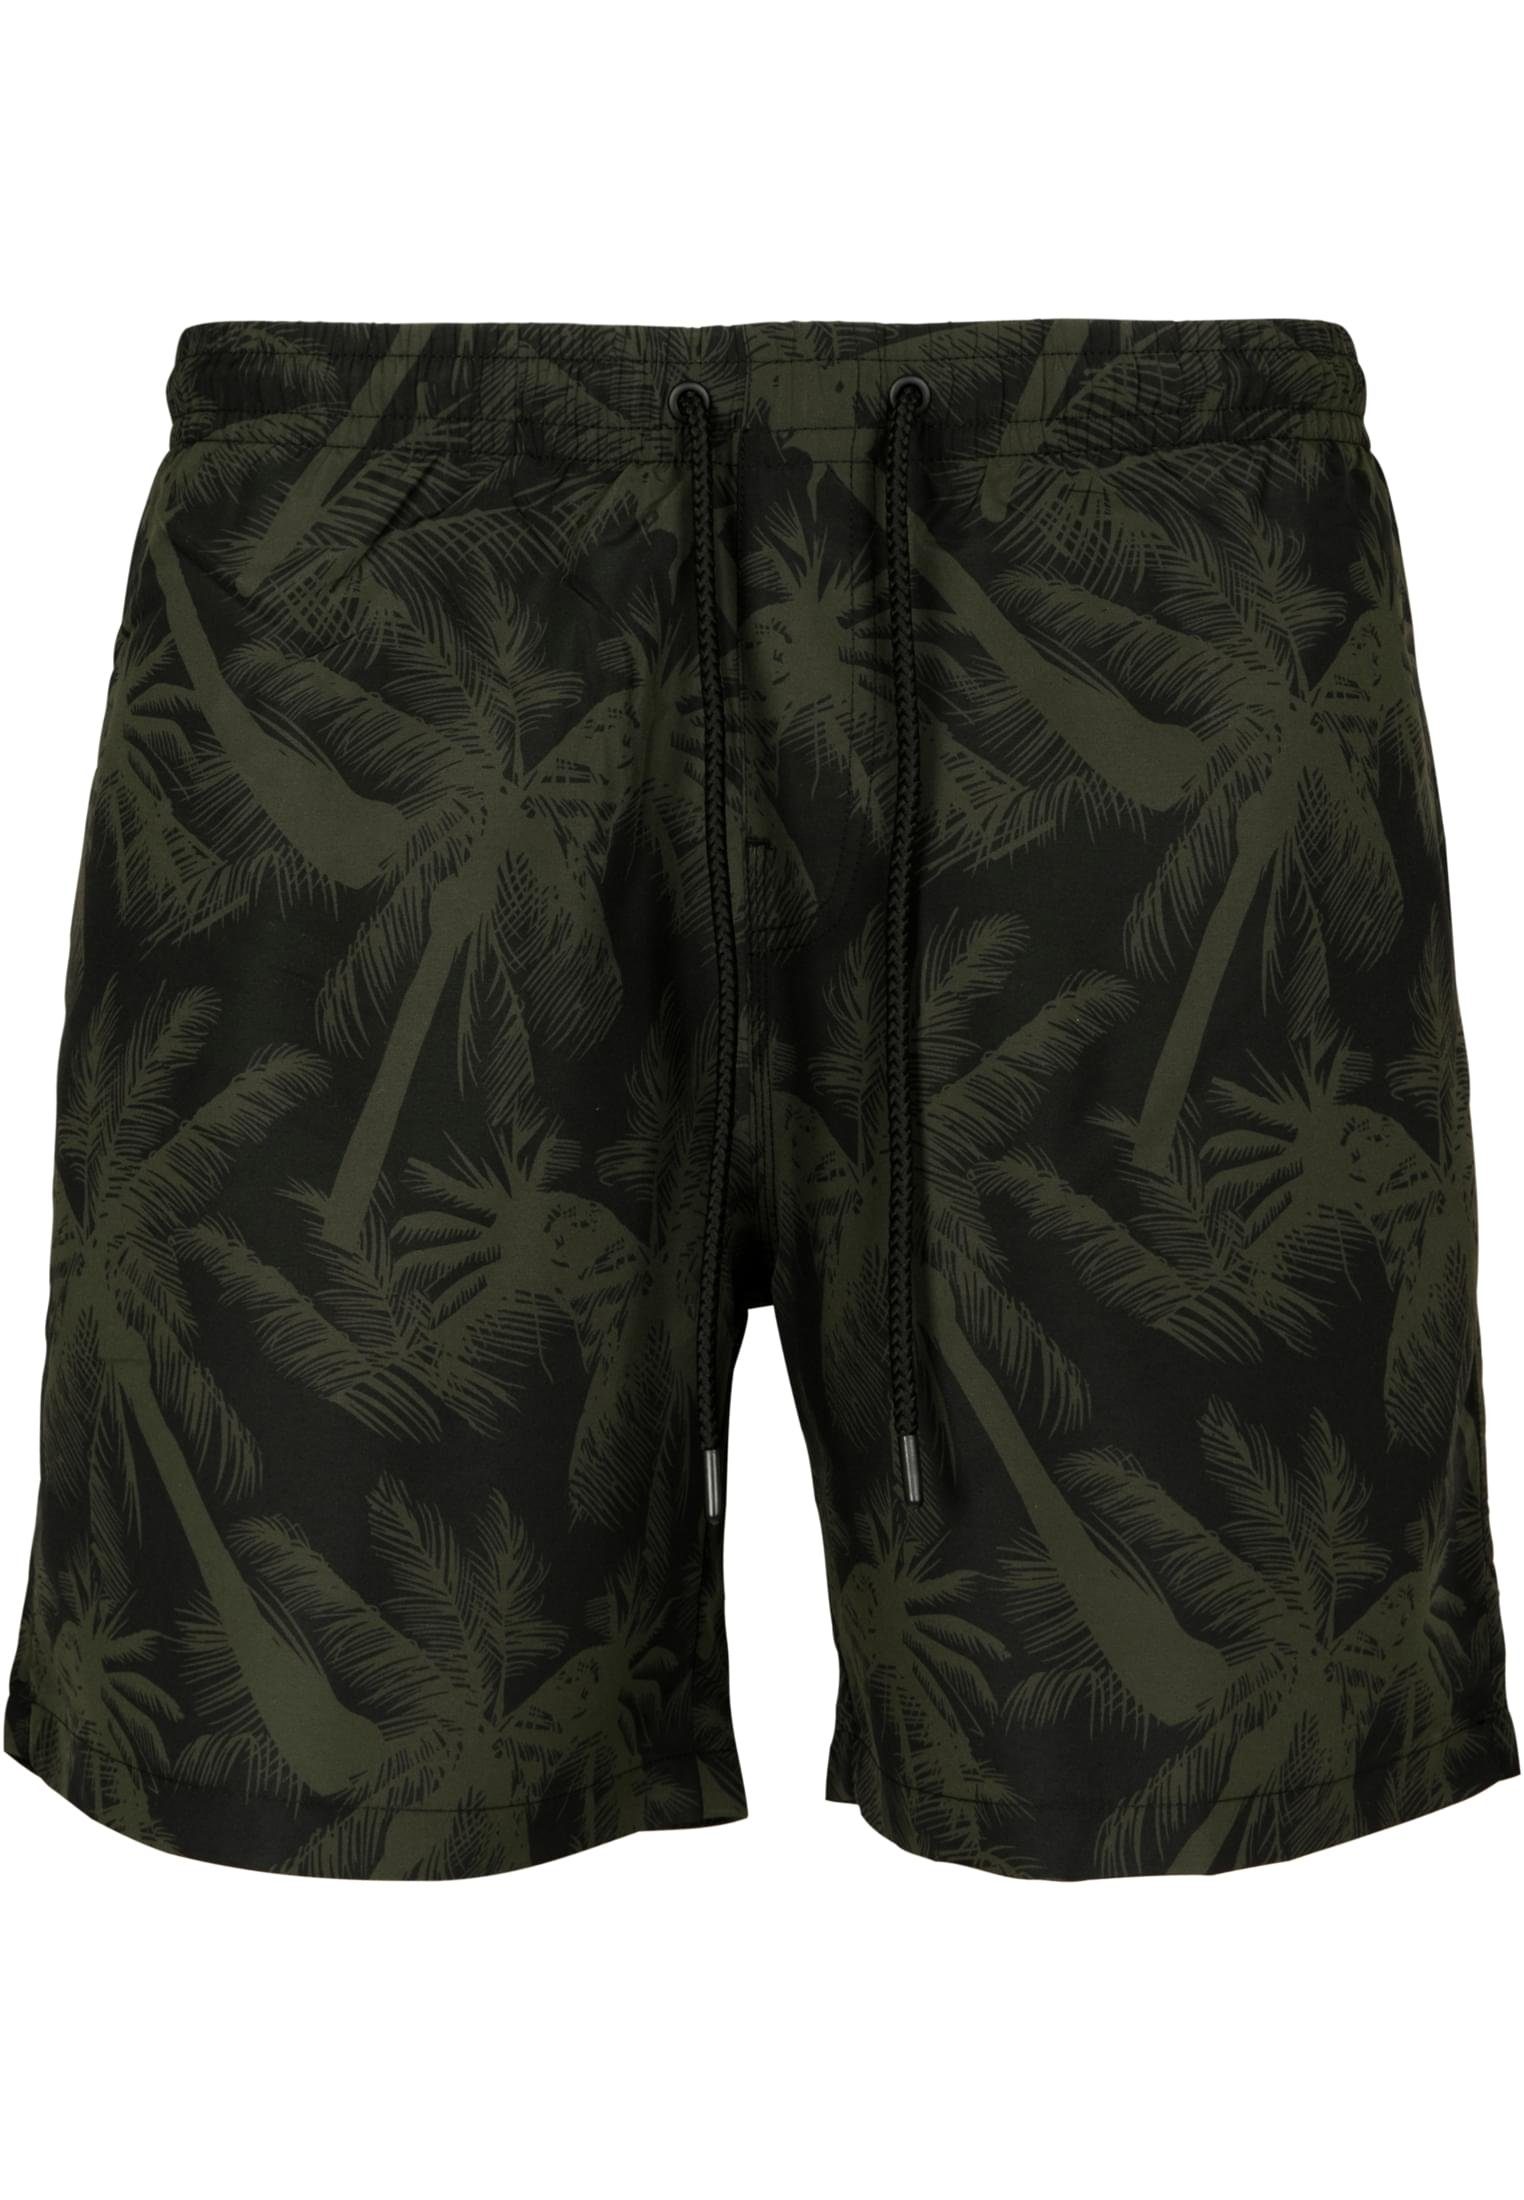 Swim palm/olive Pattern Herren URBAN Shorts Badeshorts CLASSICS